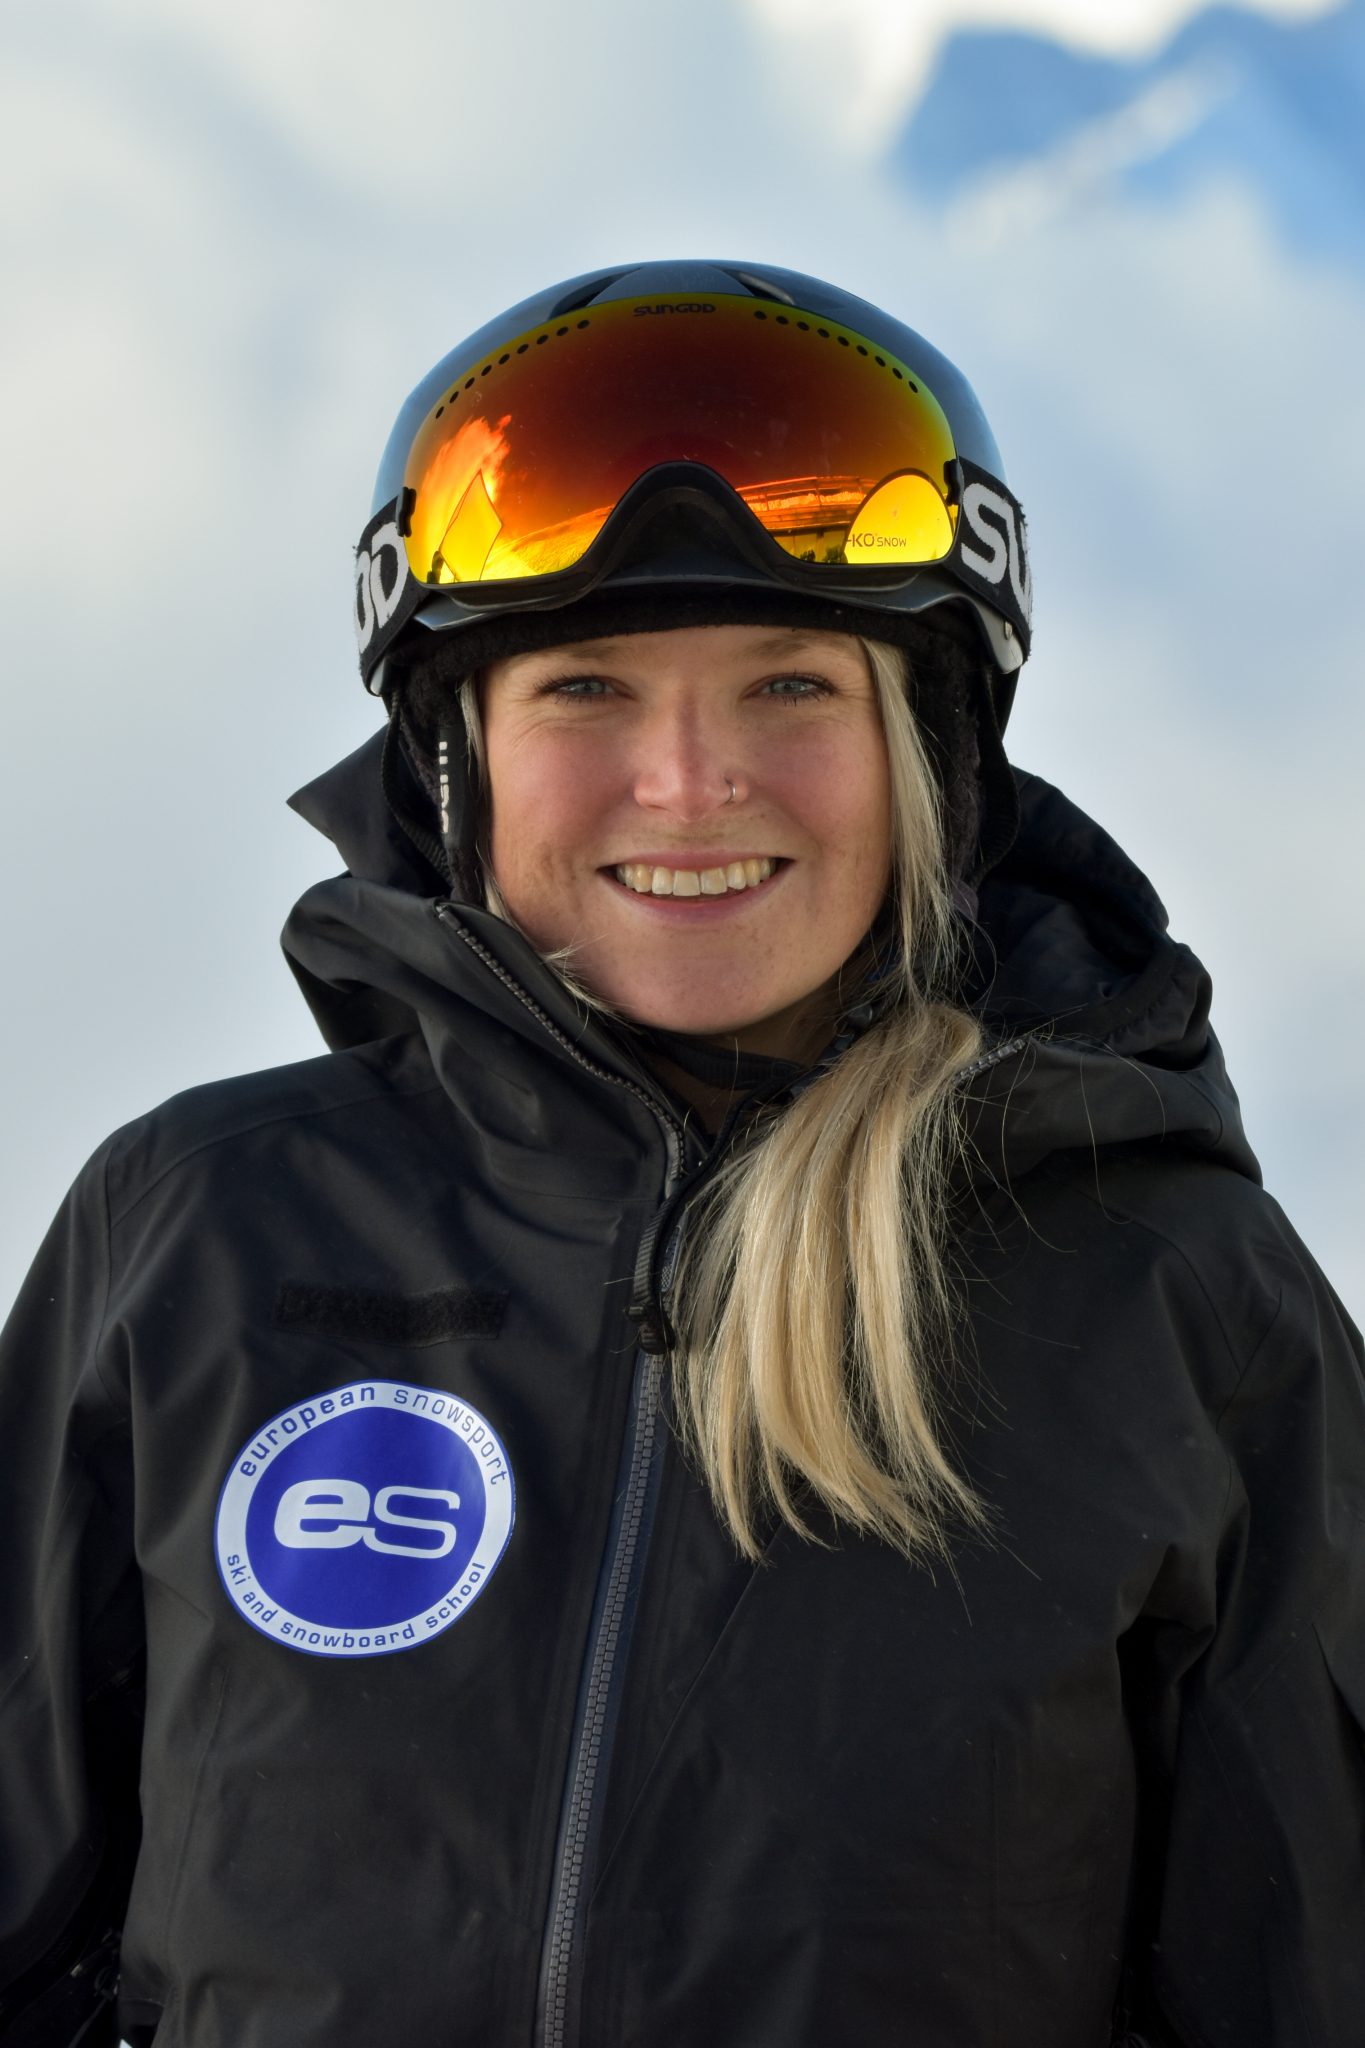 Ski instructor Kate St Clair Tisdall